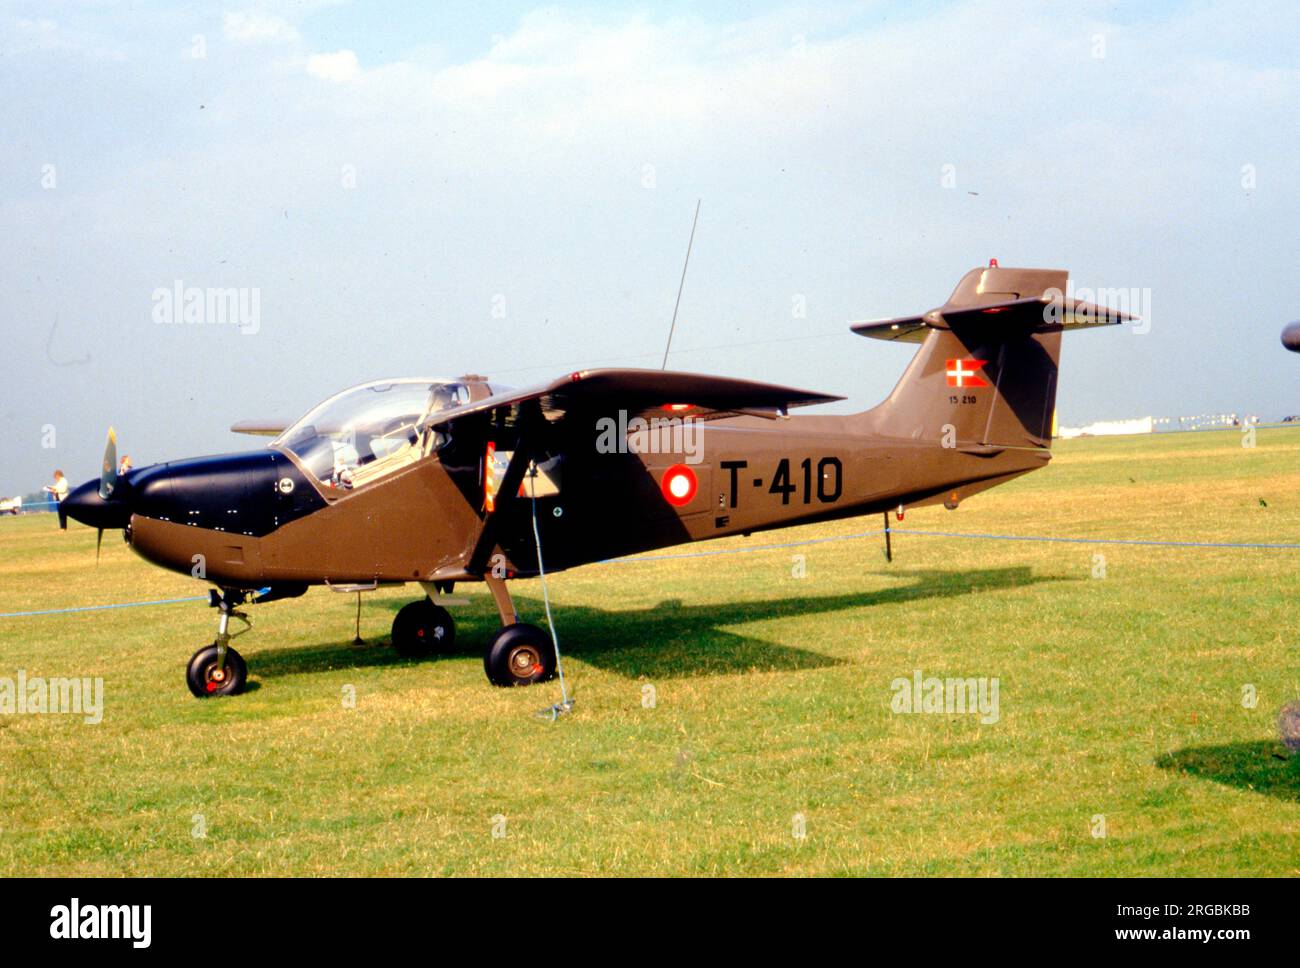 Flyvevabnet - Saab MFI-17 Supporter T-410 (msn 15-210), al Middle Wallop il 13 luglio 1986. (Flyvevabnet - Royal Danish Air Force). Foto Stock